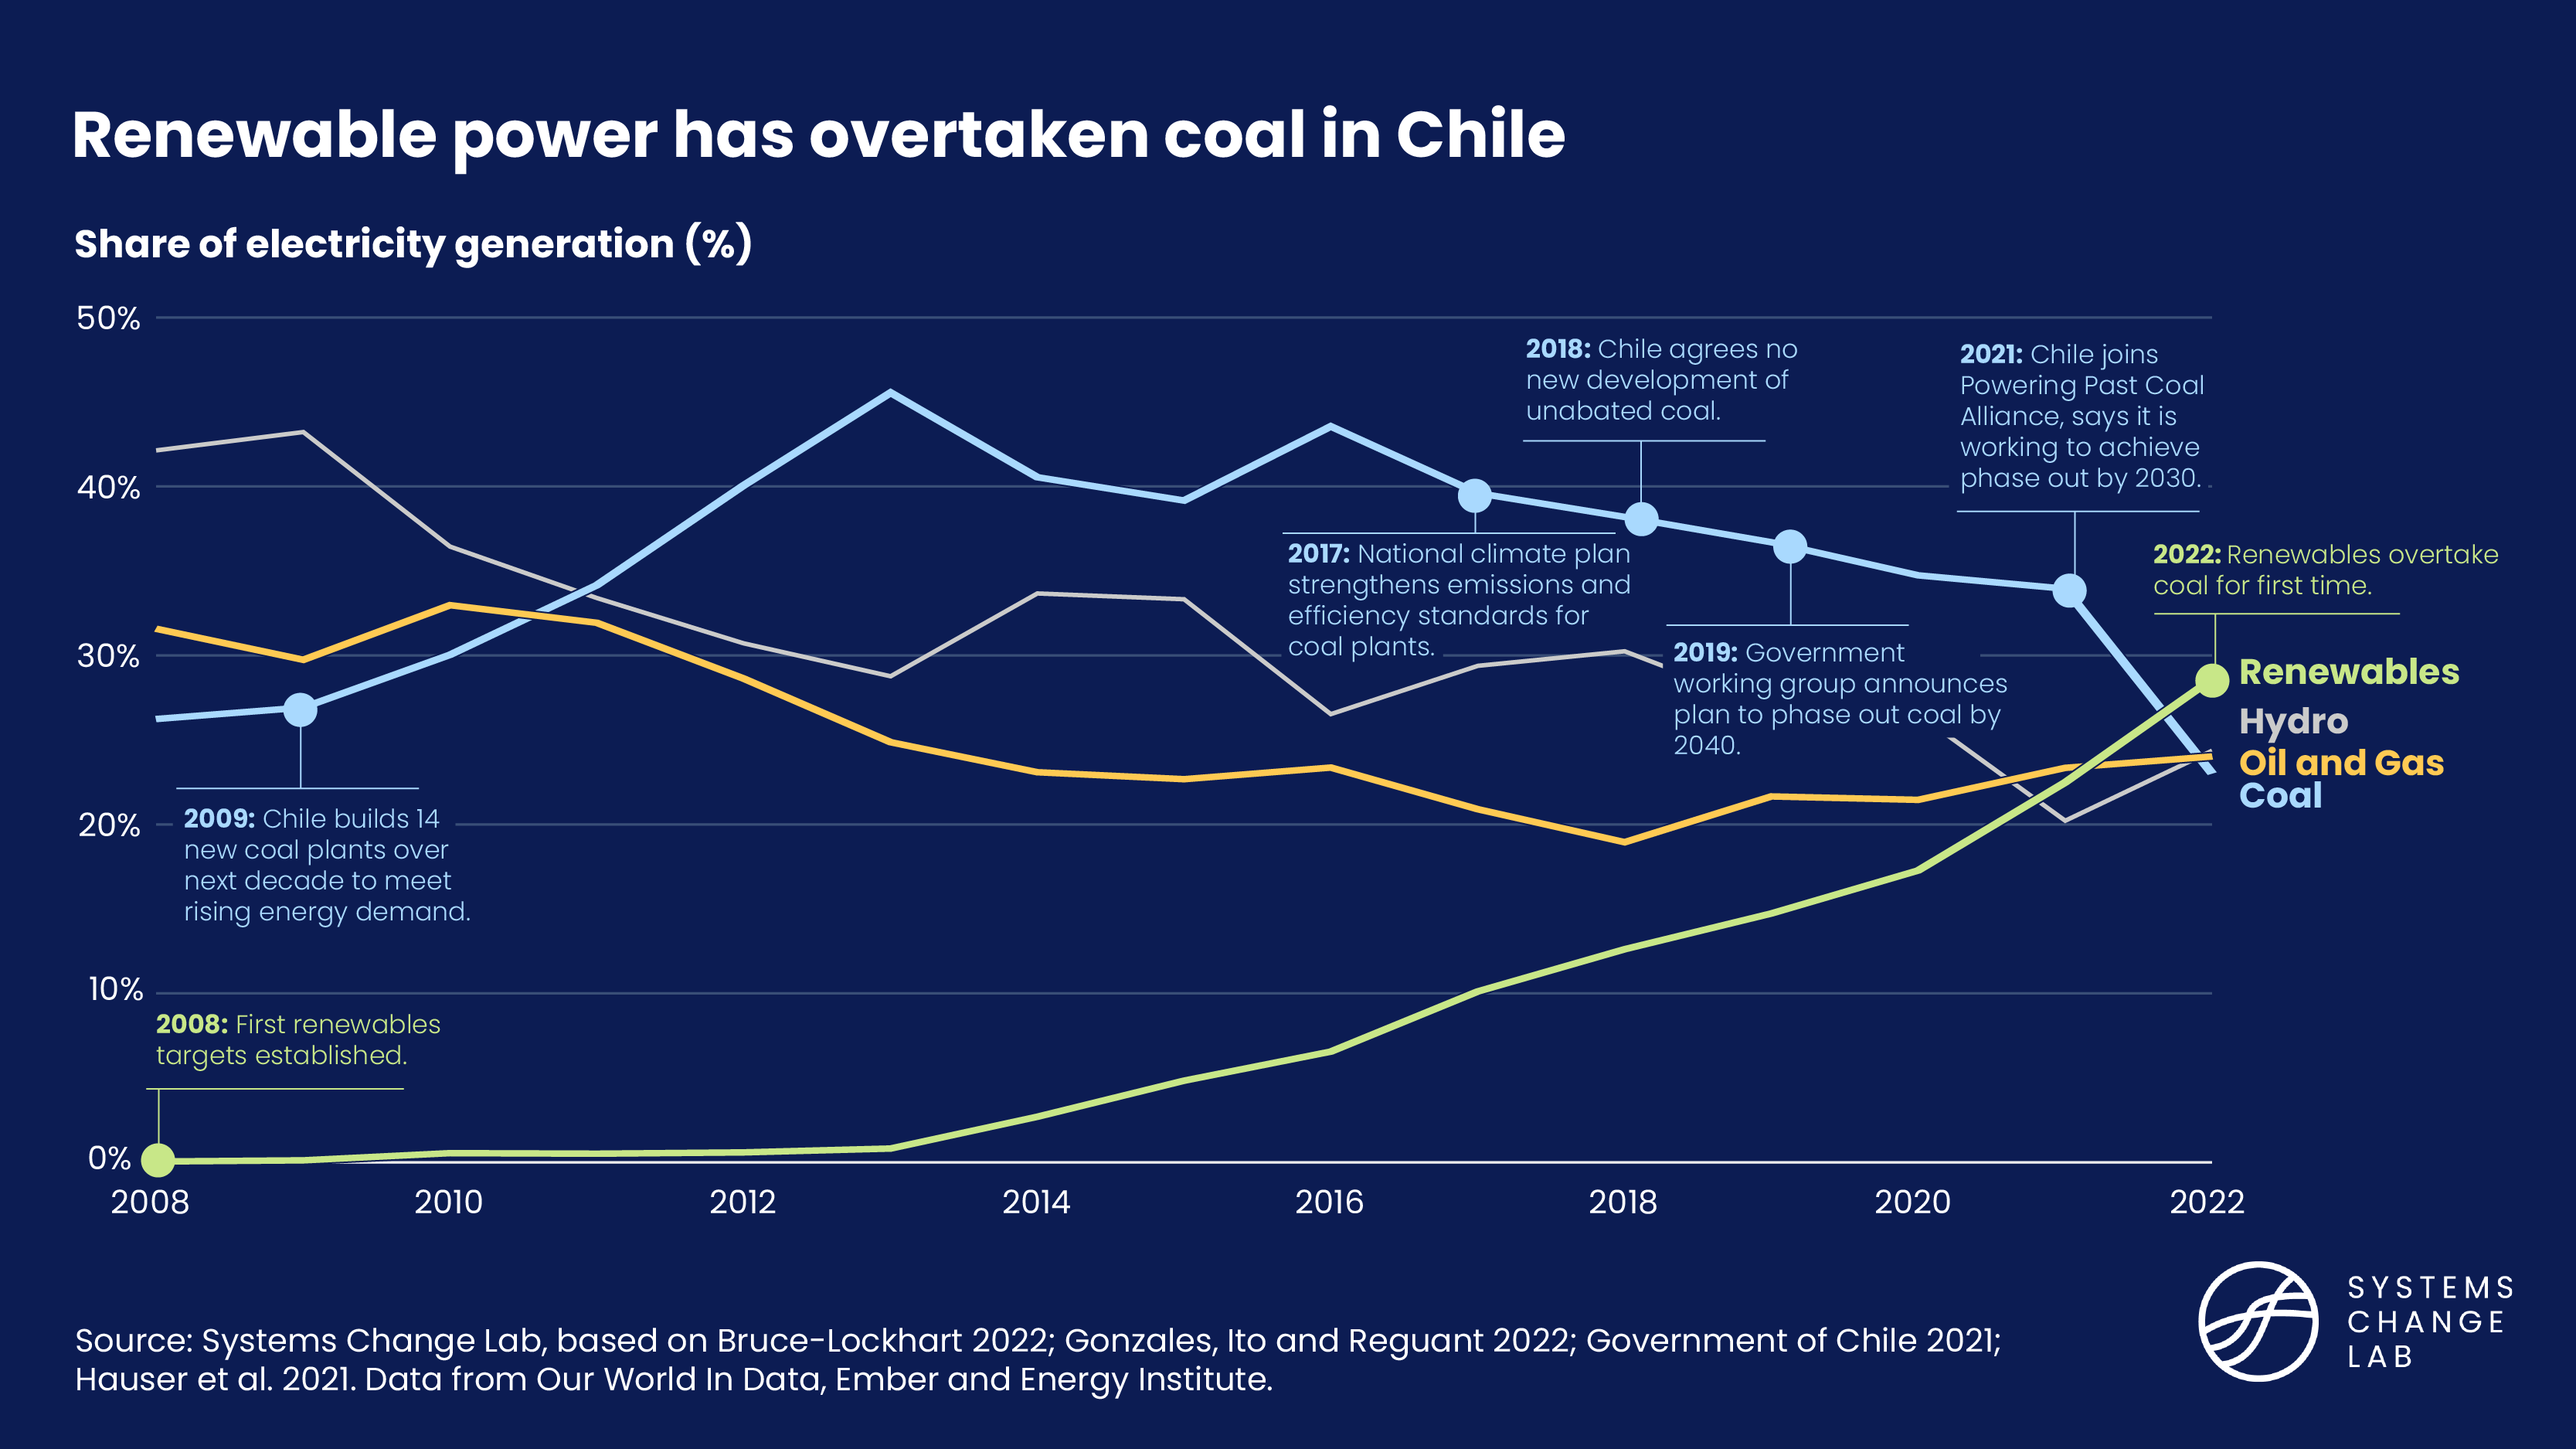 TImeline showing how renewable power has overtaken coal in Chile